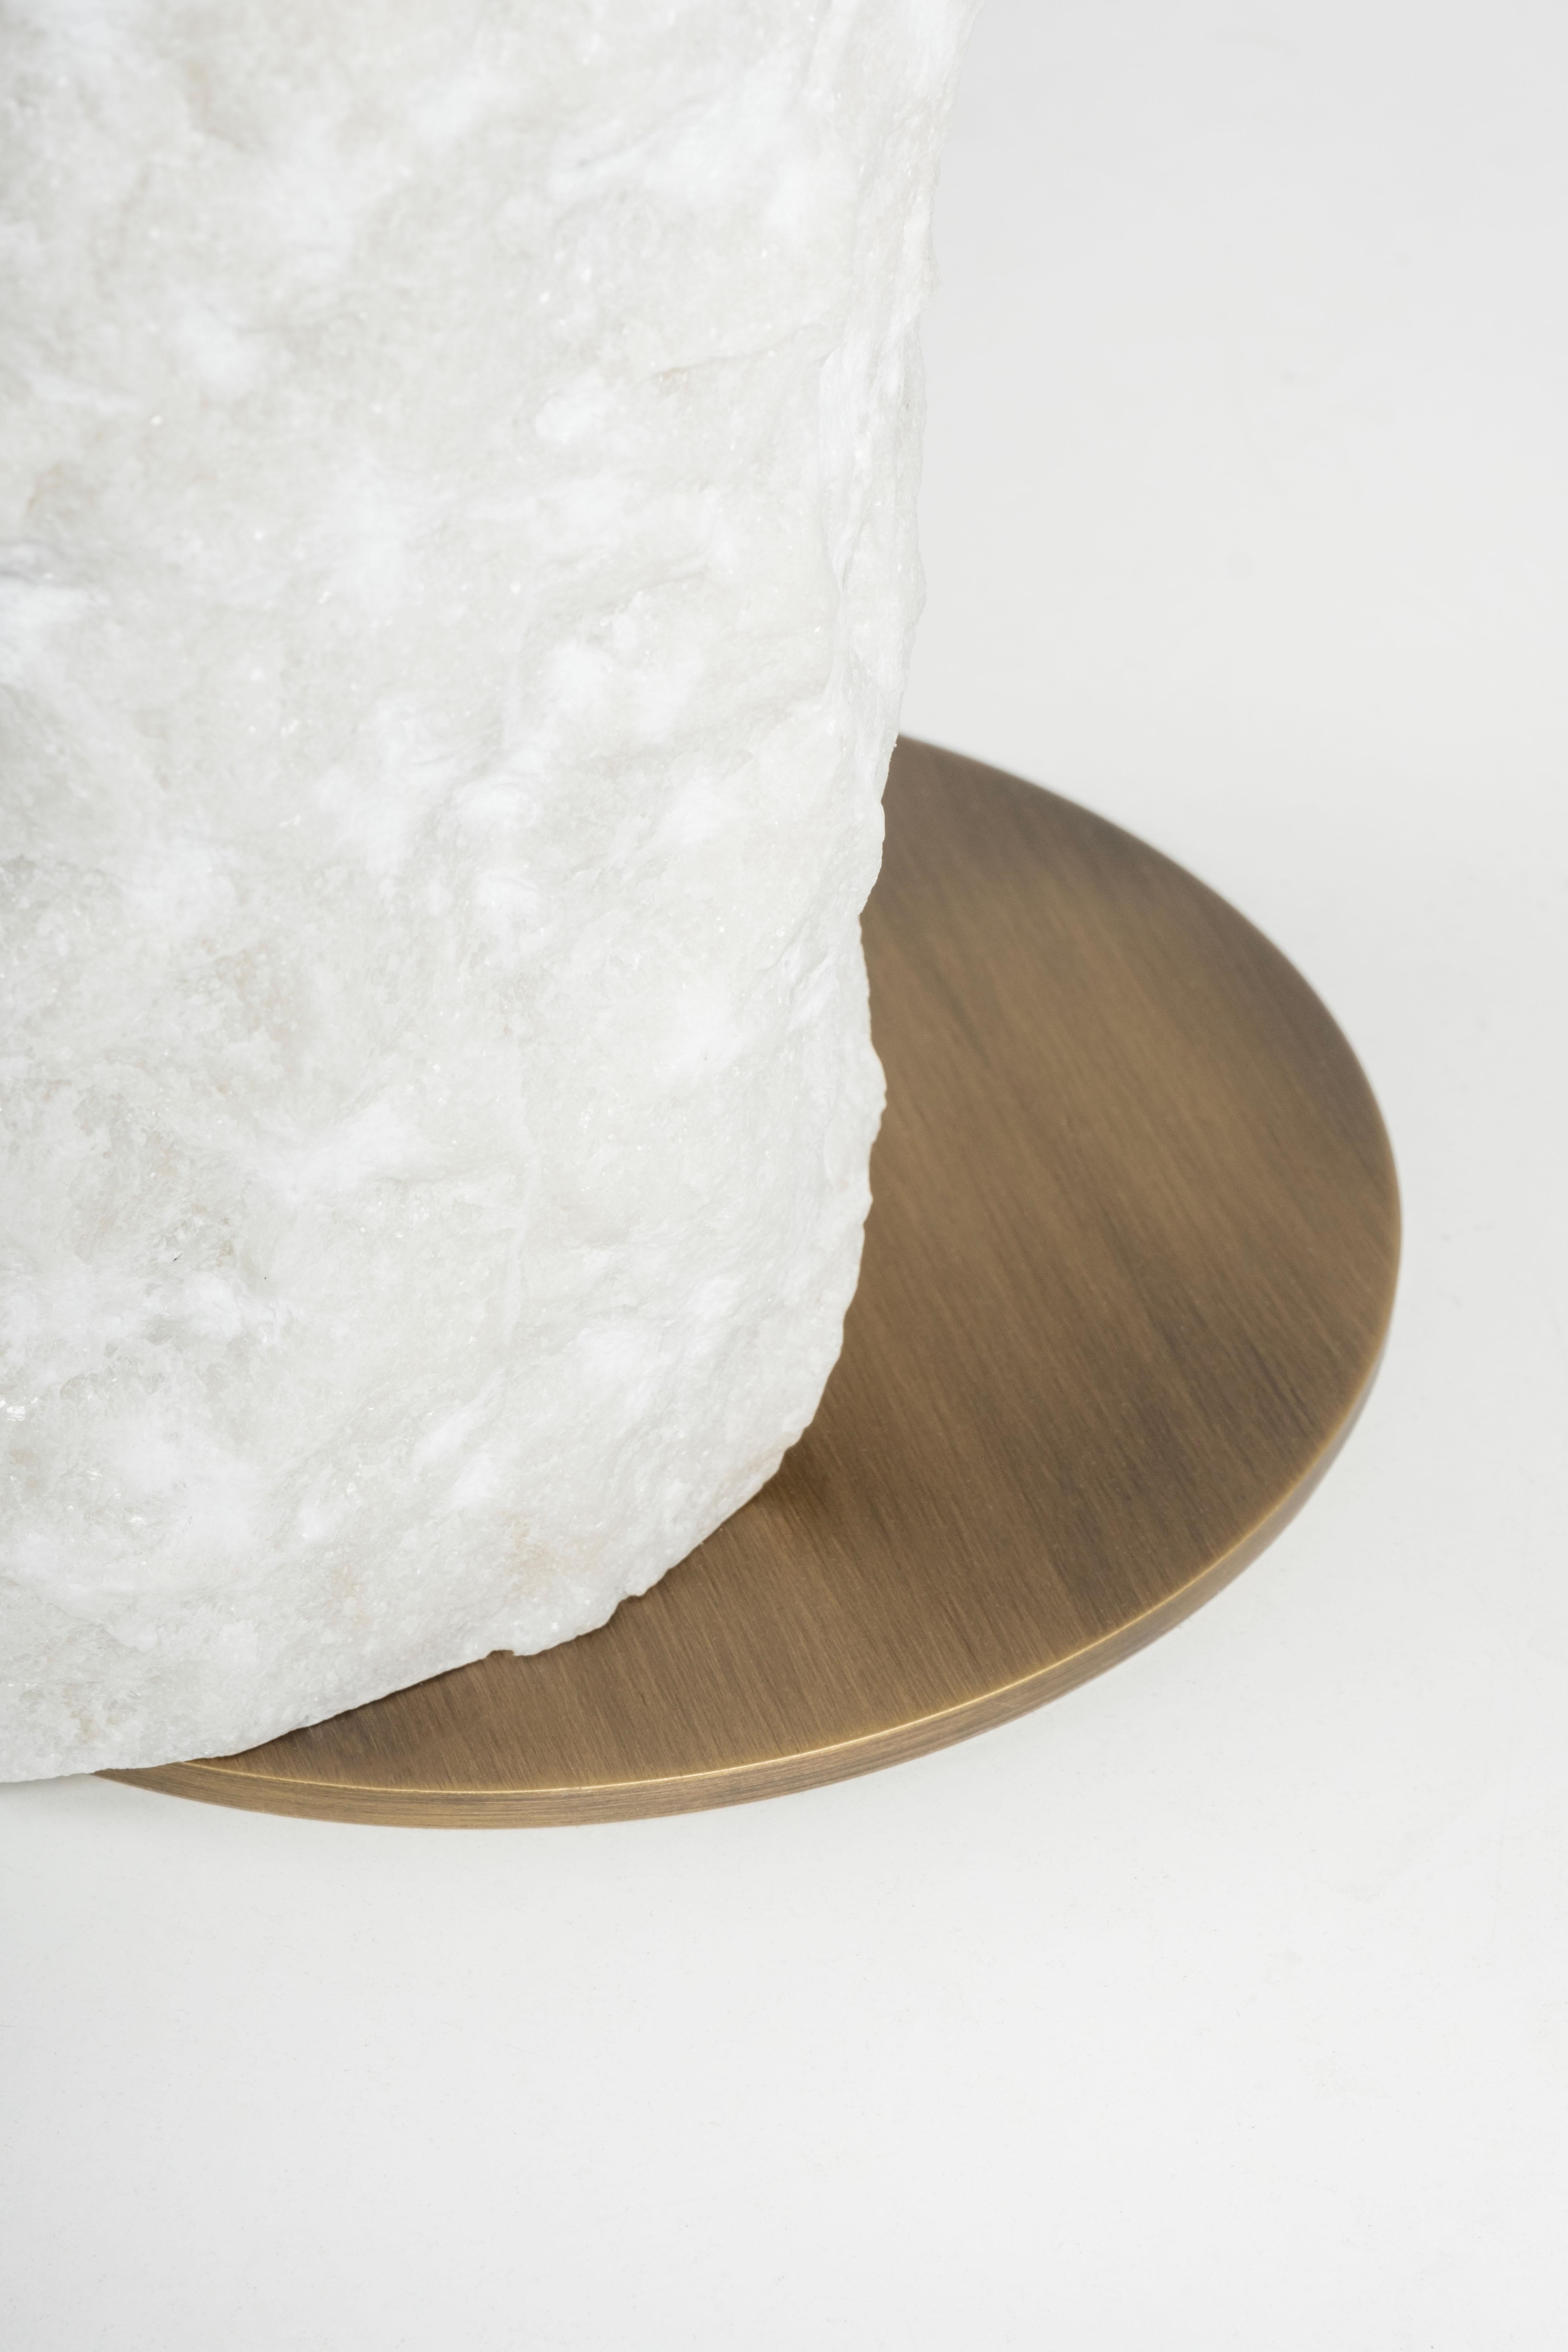 Organic Modern Pico Side Table Calacatta Marble, Handmade Portugal by Greenapple For Sale 11